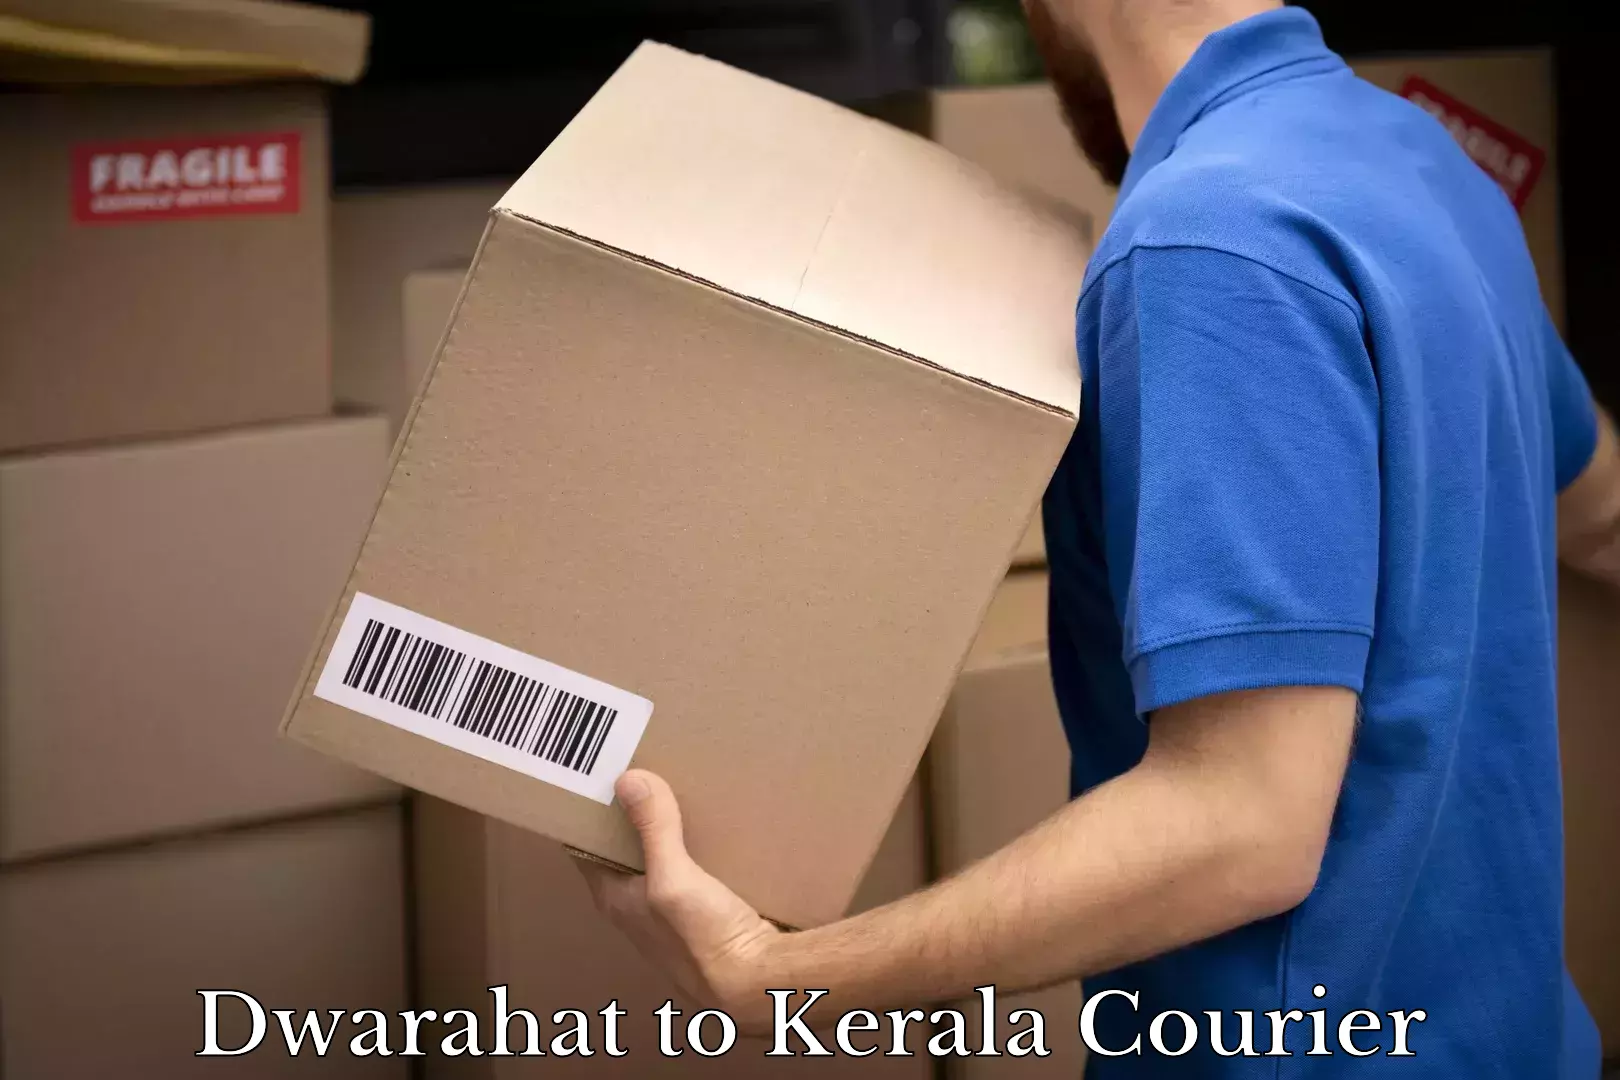 Doorstep delivery service Dwarahat to Kerala